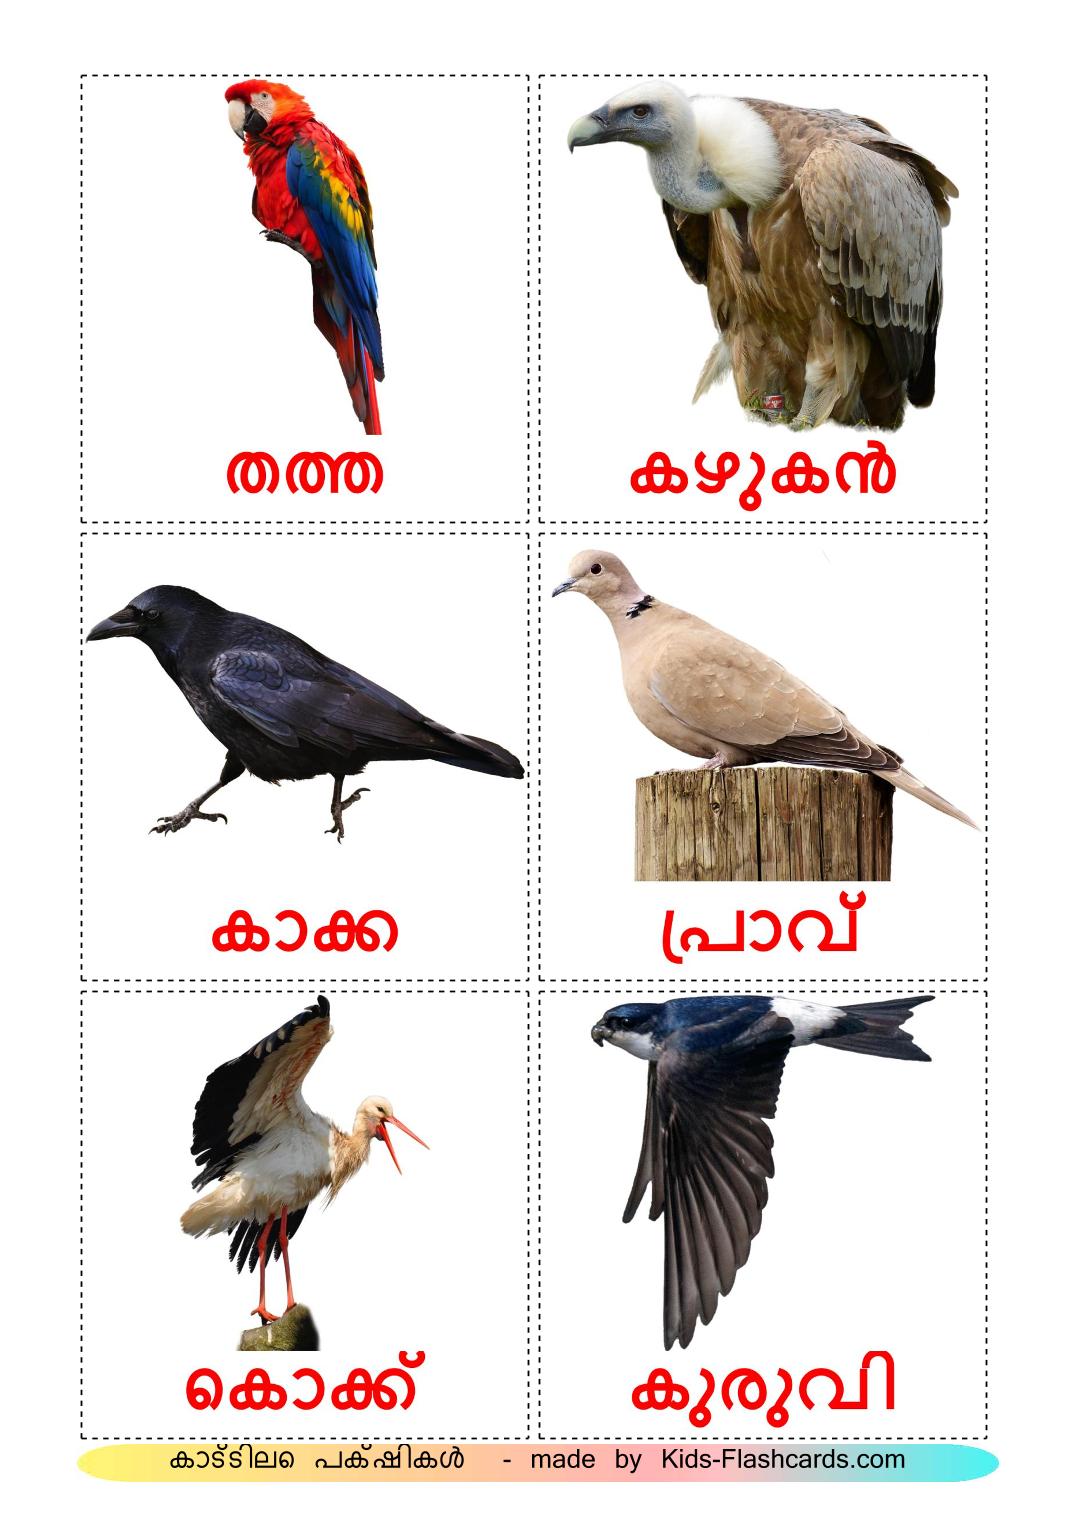 Uccelli selvaggi - 18 flashcards malayalam stampabili gratuitamente